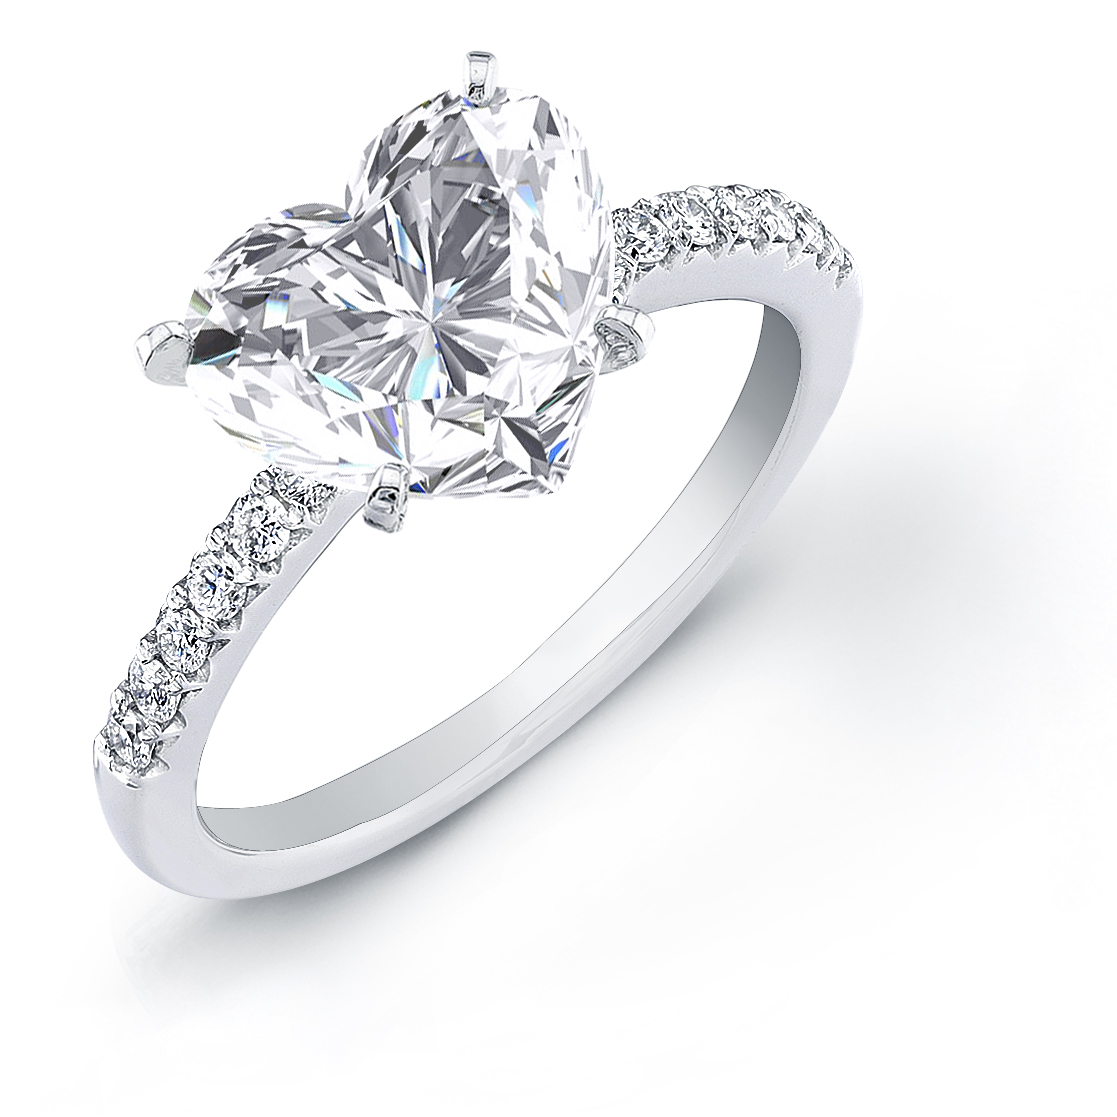 Heart Diamond Rings: 30 Stunning Picks For Every Bride.